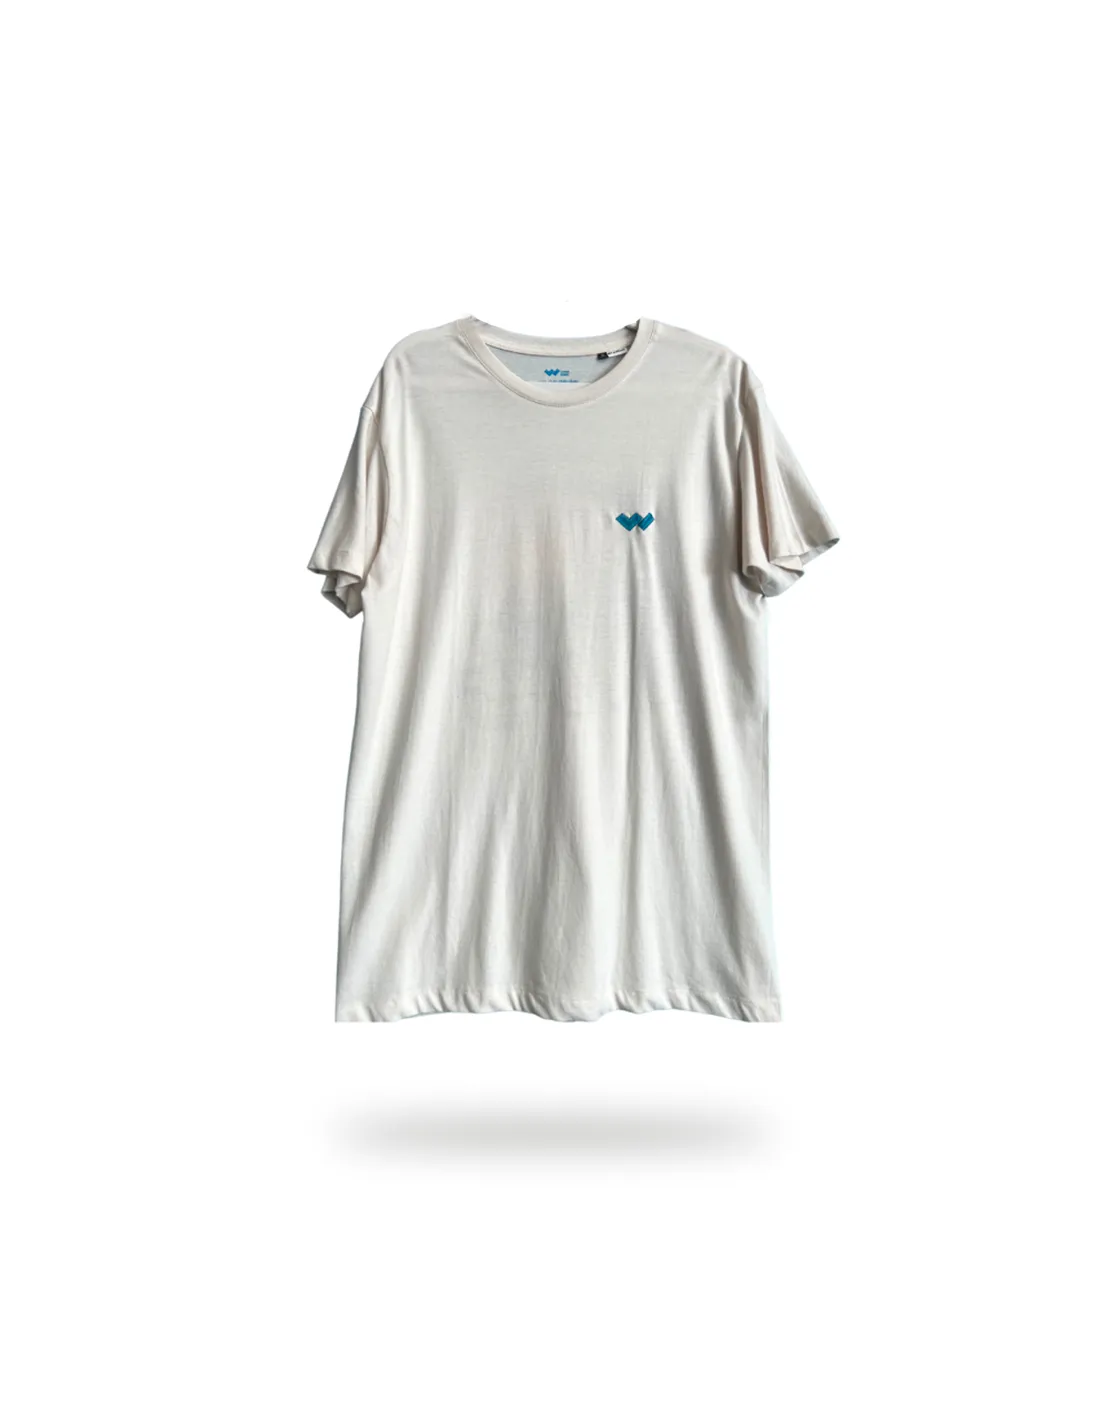 Long Wave Unisex T-shirt - The long wave von Nazare